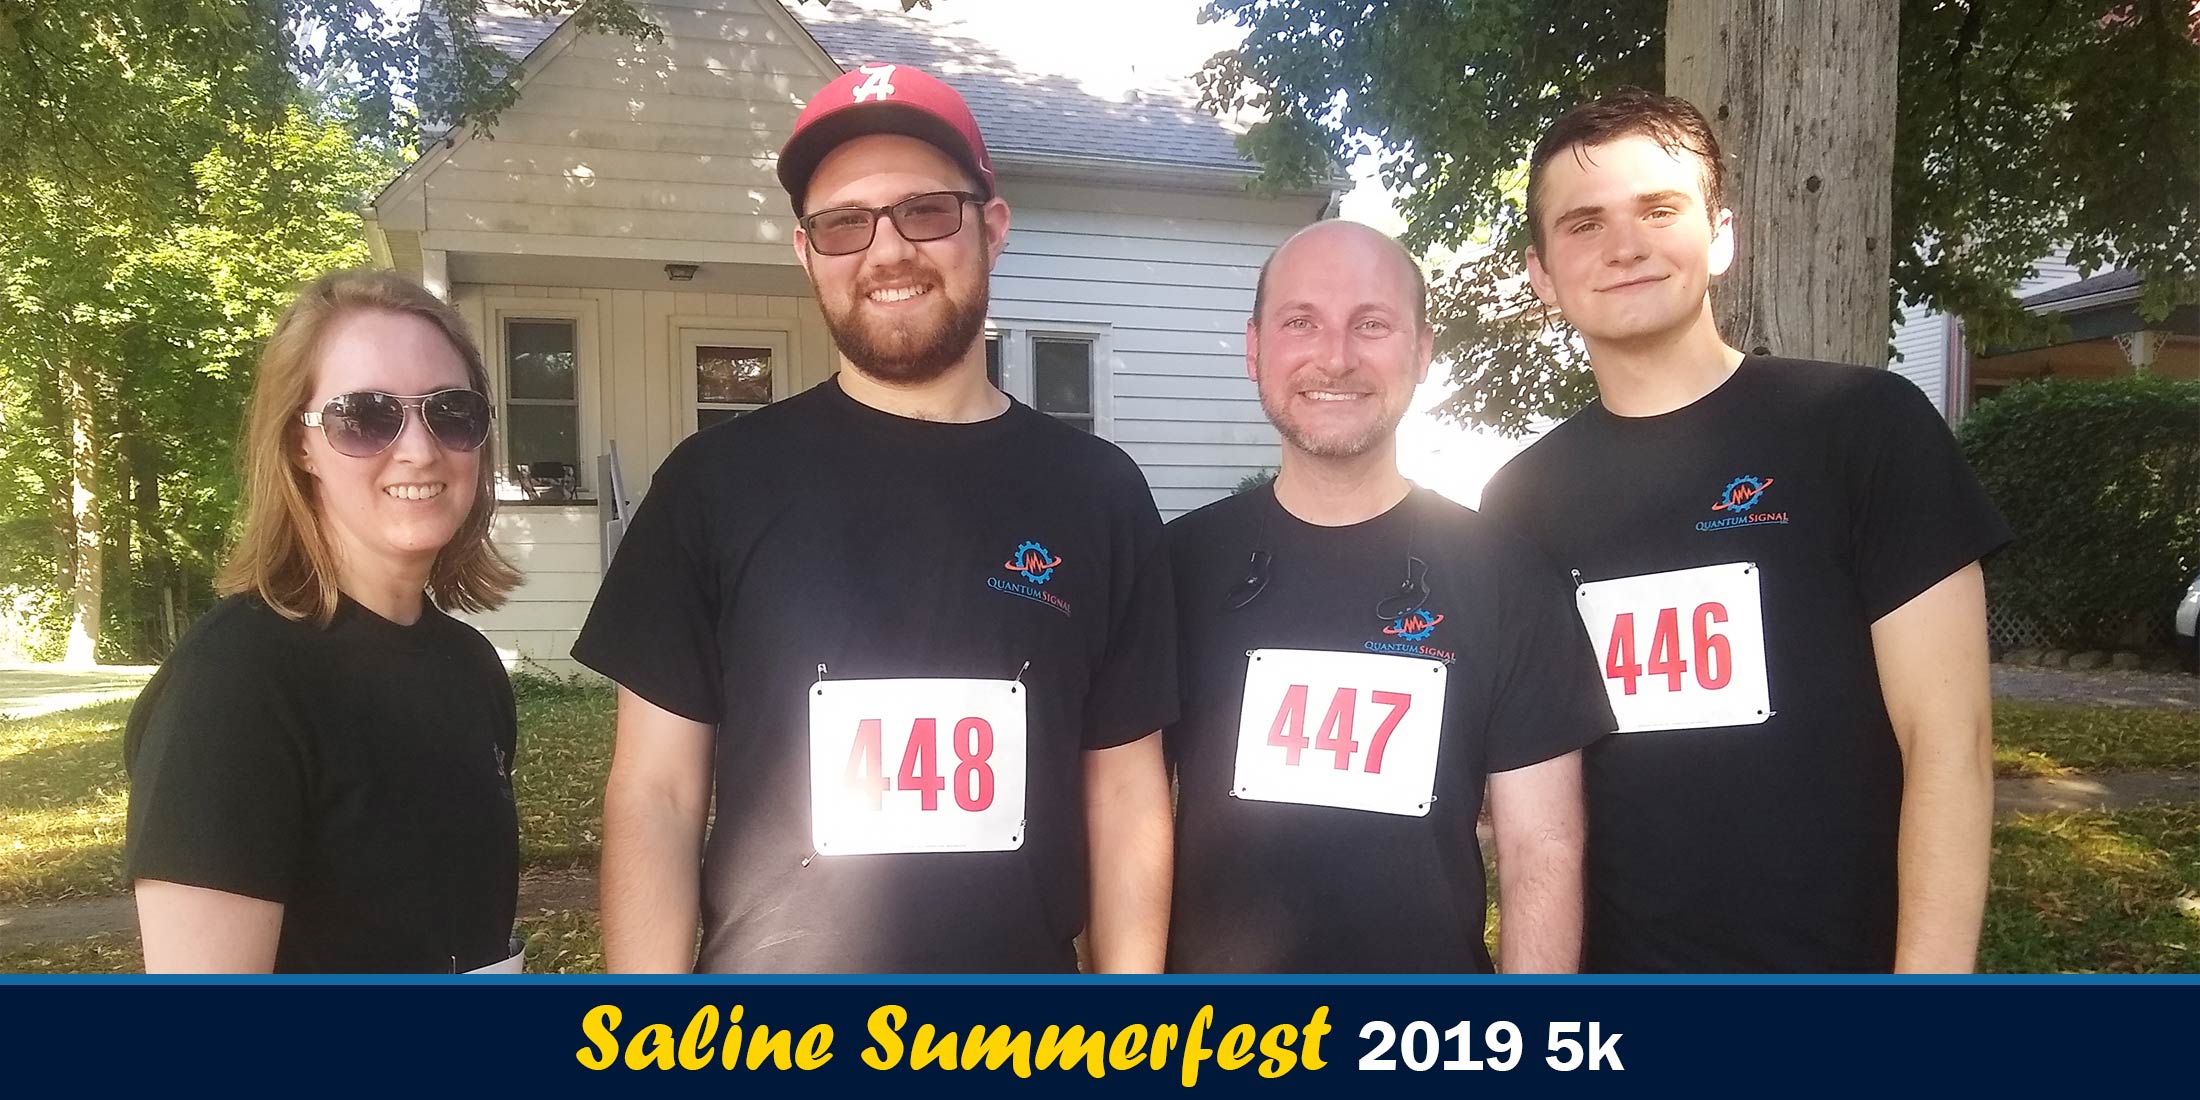 Saline Summerfest 2019 5k group photo